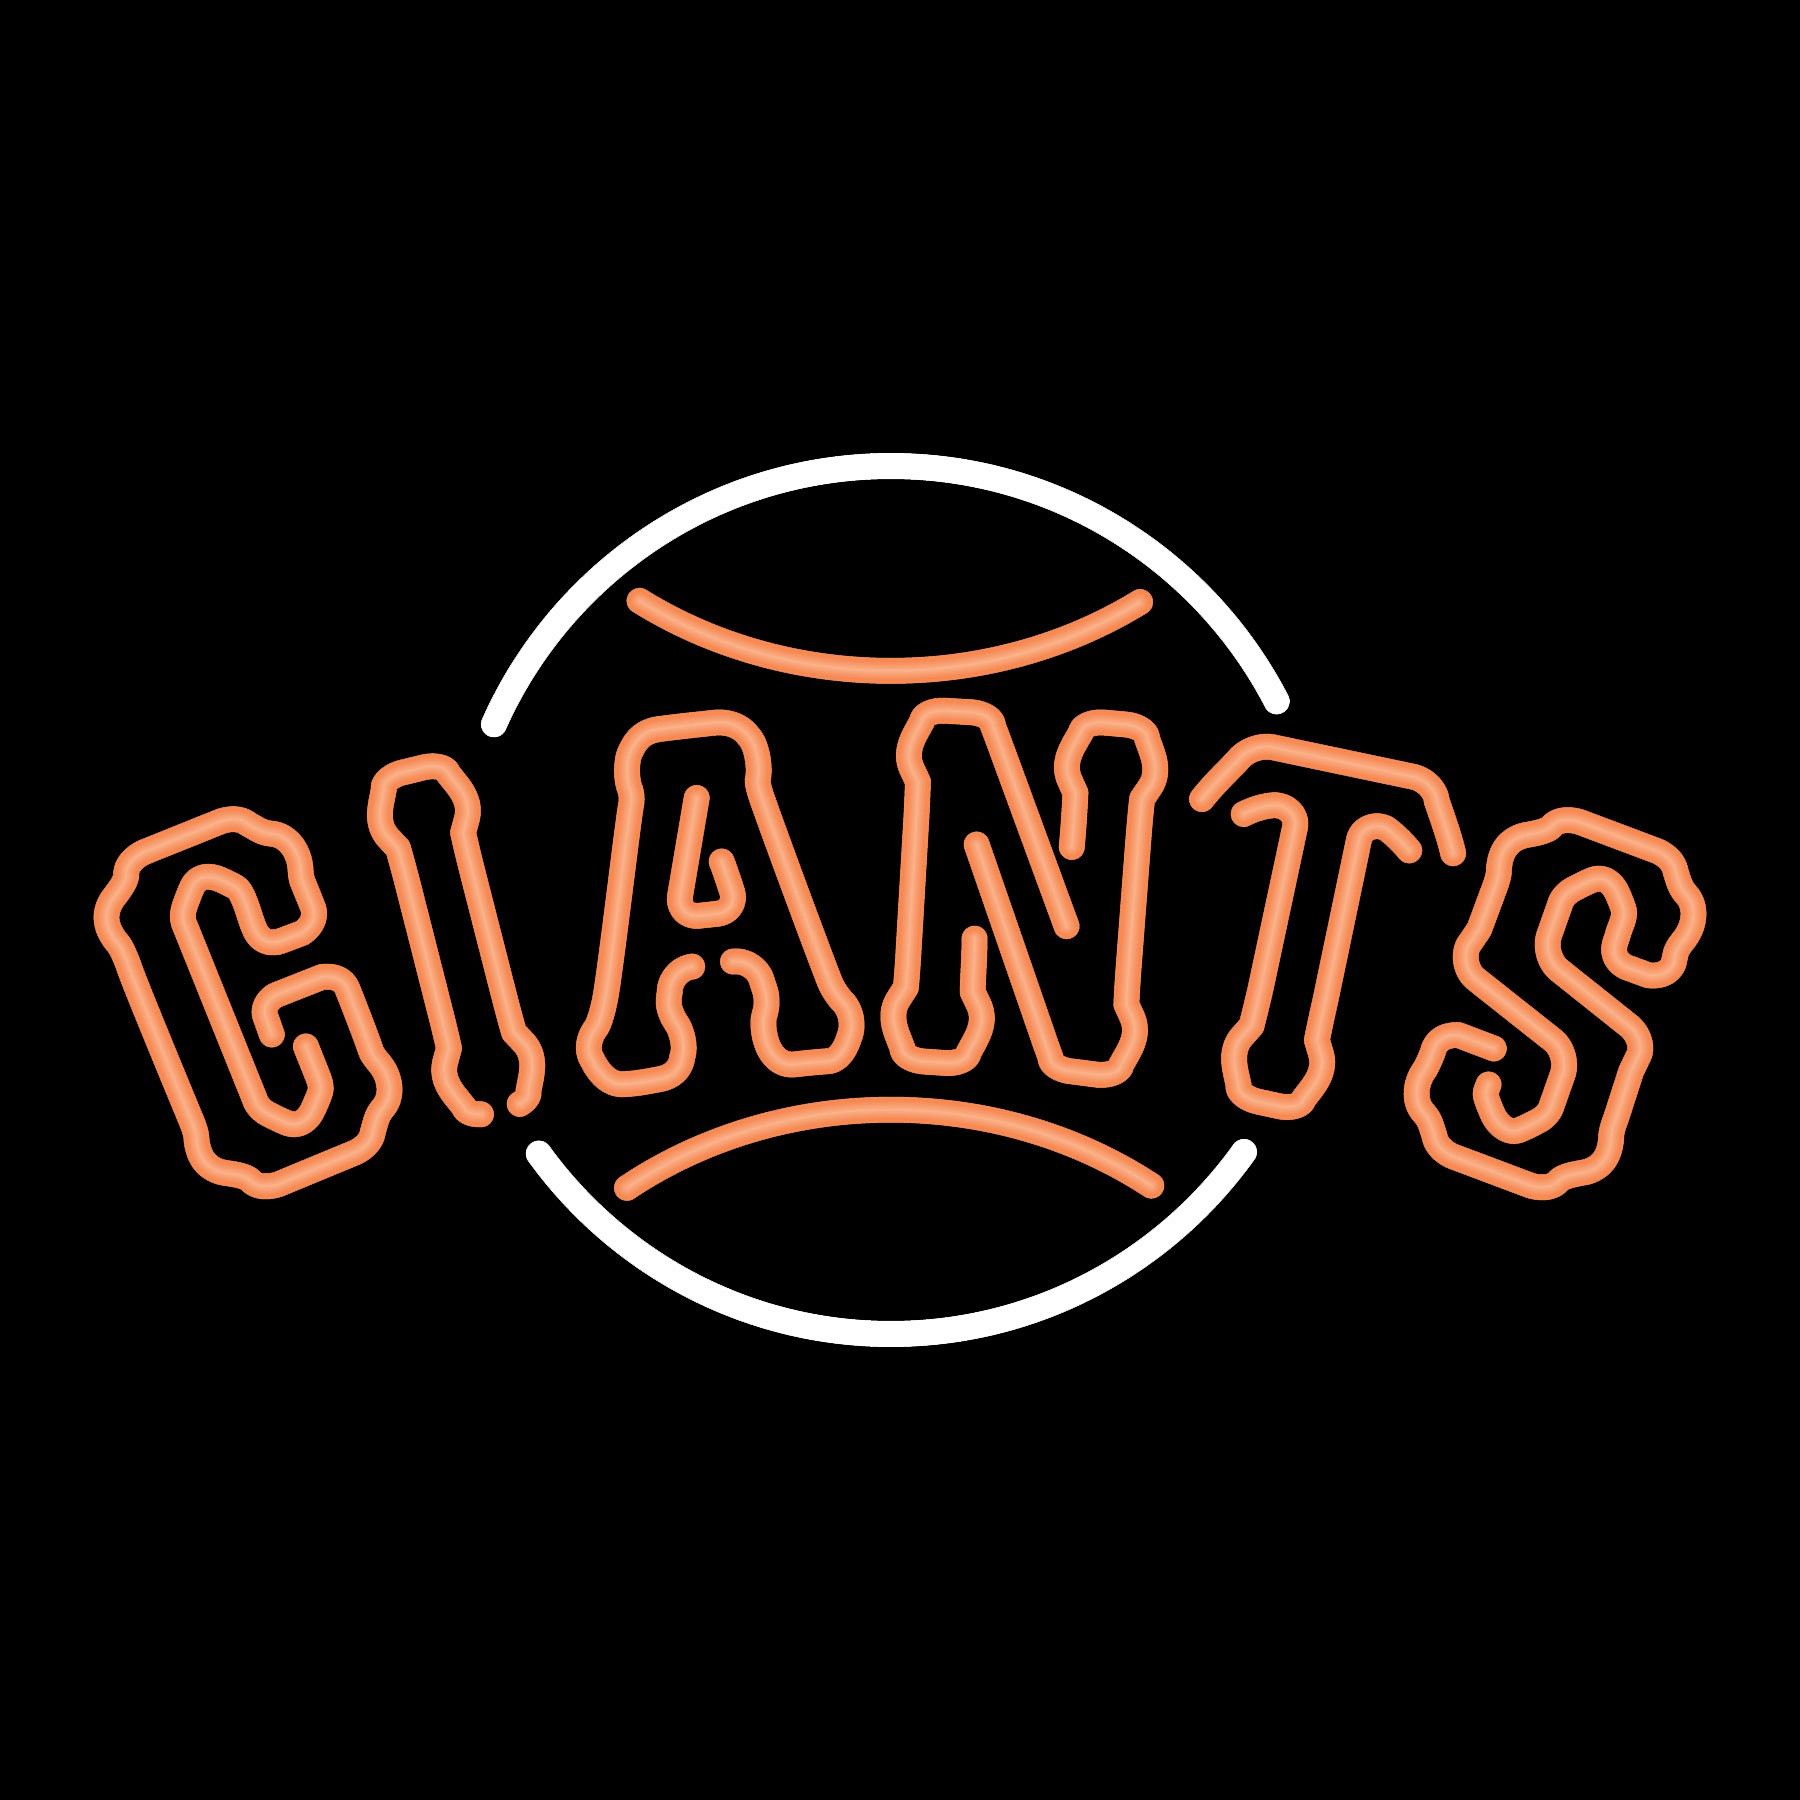 Sf Giants Baseball Screensavers. Sports San Francisco Giants Image Free Download Wallpaper Sf Giants. San Francisco Giants Logo, San Francisco Giants, Neon Signs